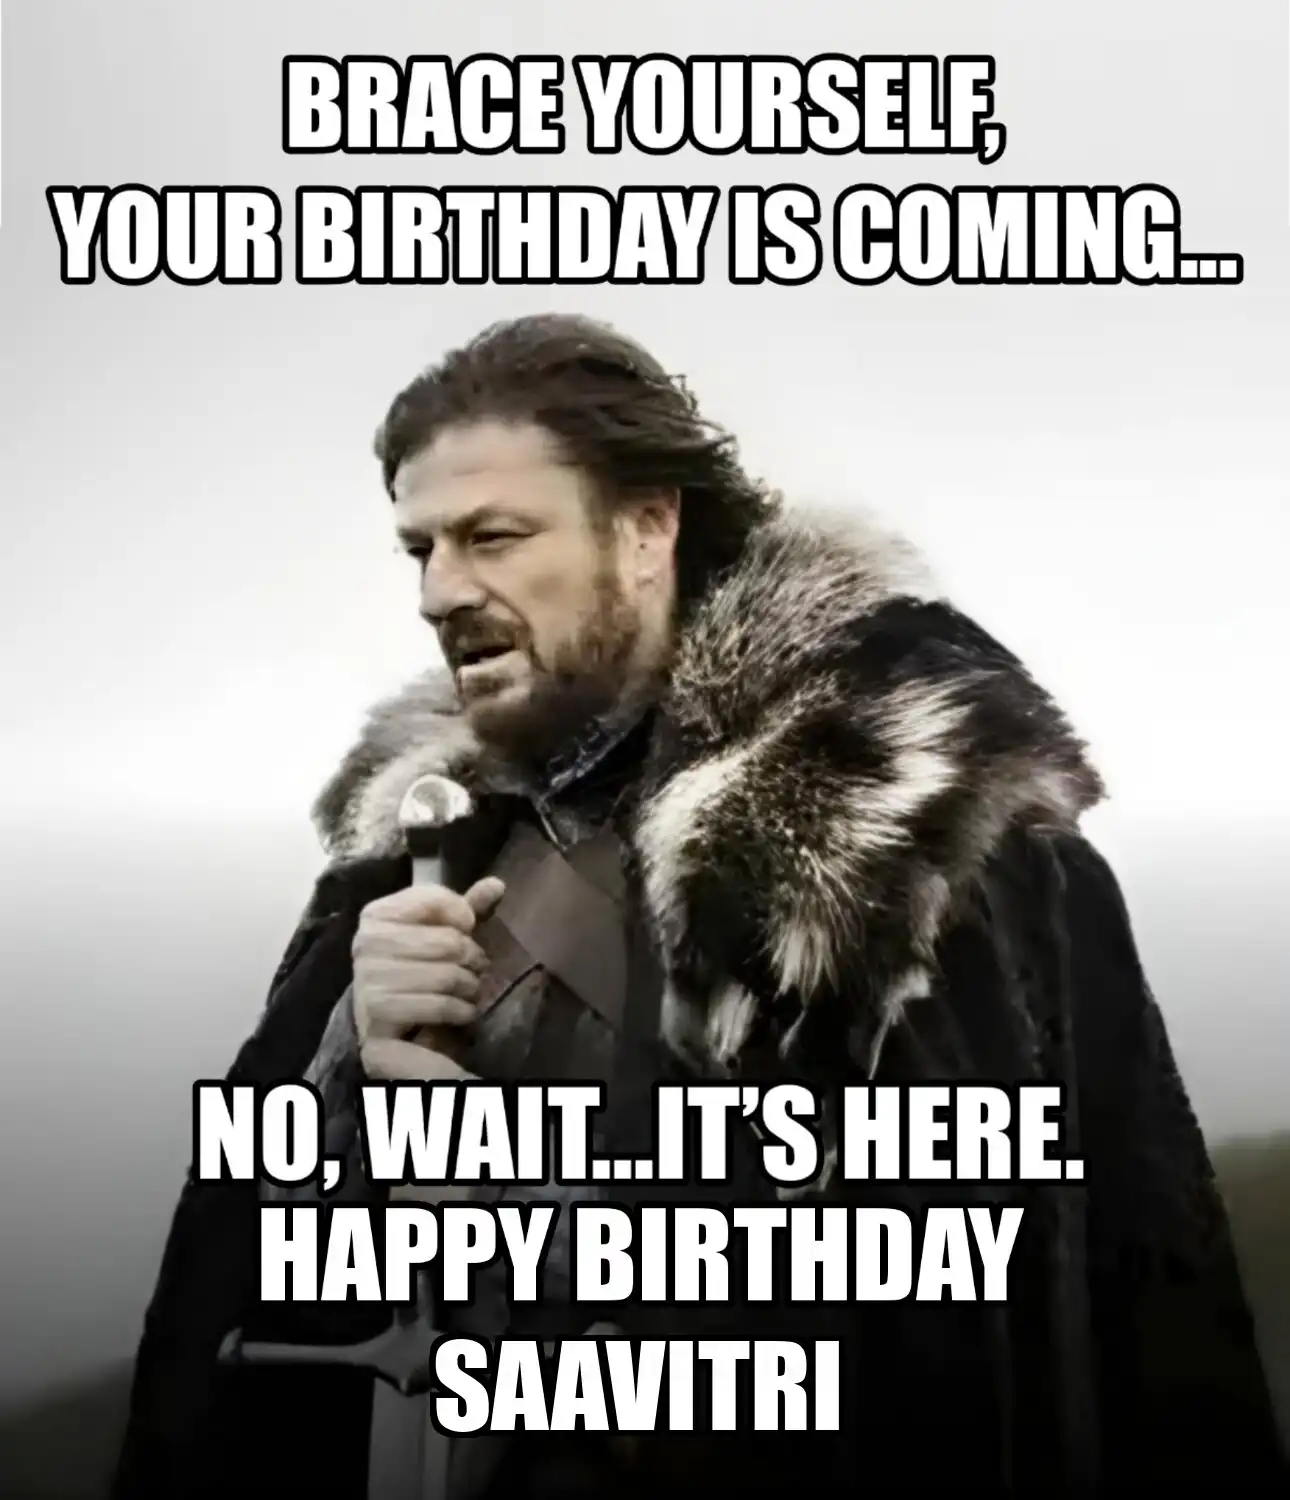 Happy Birthday Saavitri Brace Yourself Your Birthday Is Coming Meme